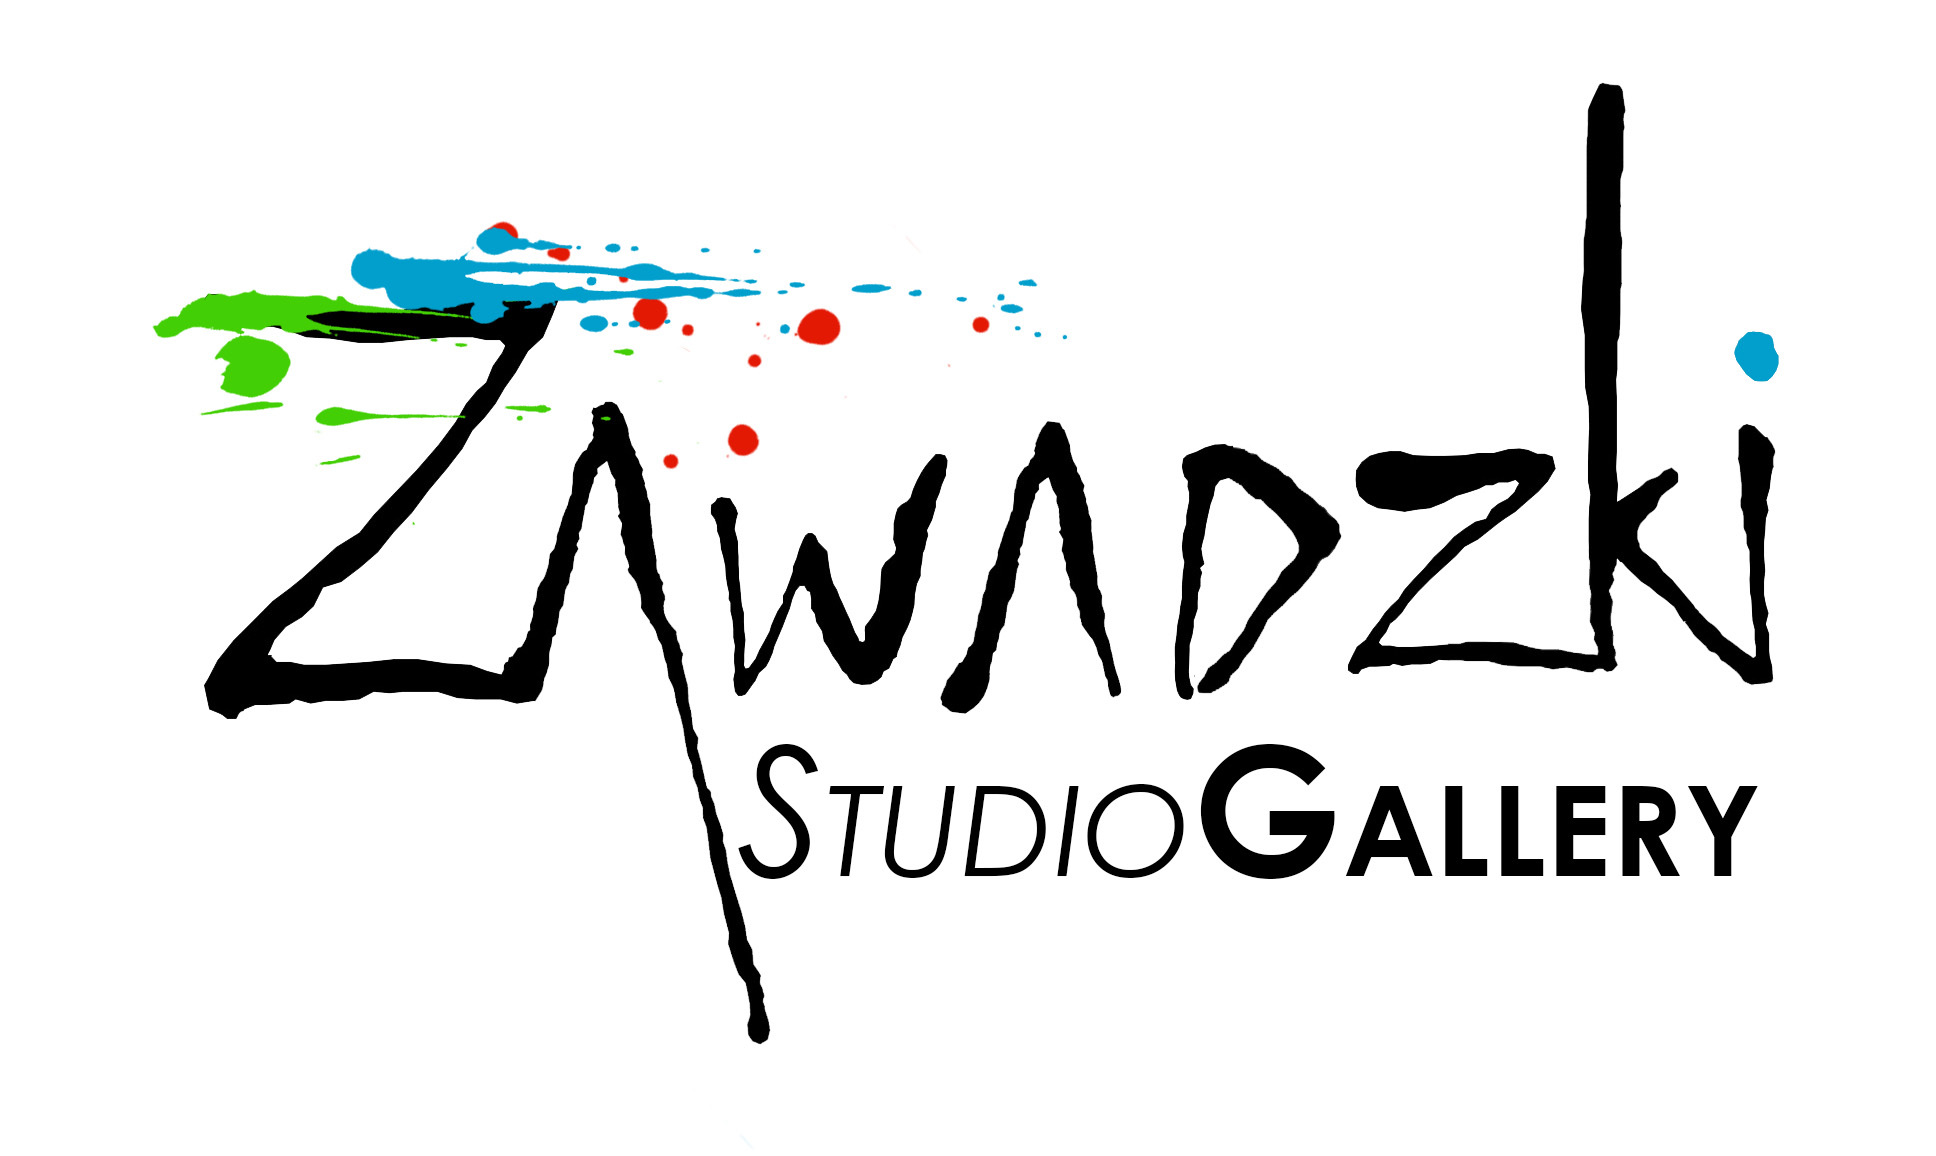 Zawadzki studio | gallery logo